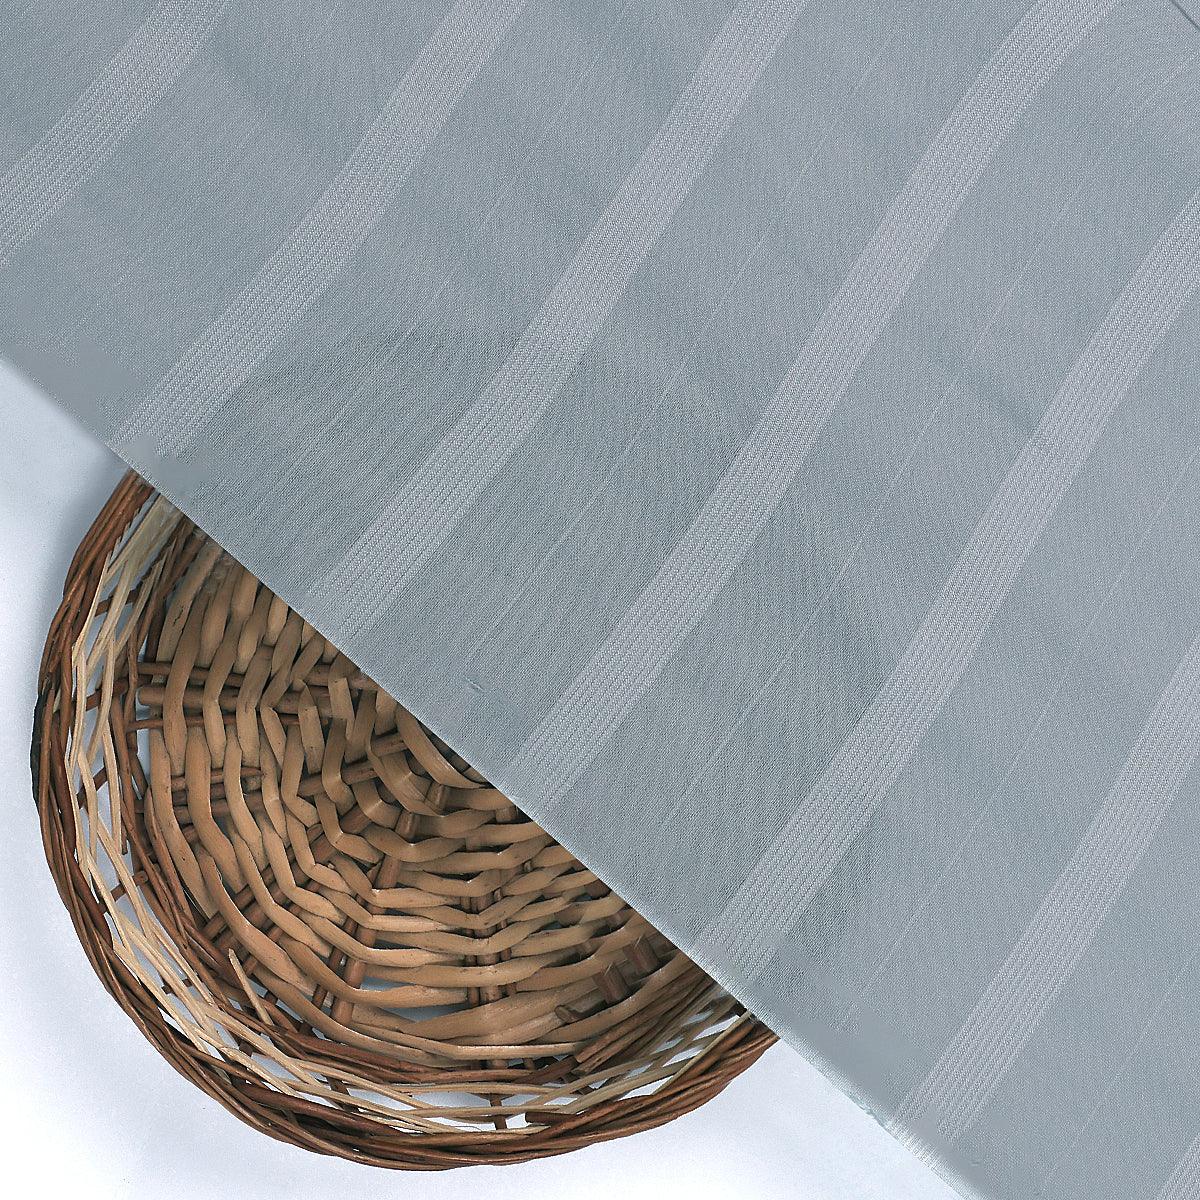 Pastel Blue Colour Bengal Stripes Self Patterned Dyed Fabric - FAB VOGUE Studio®